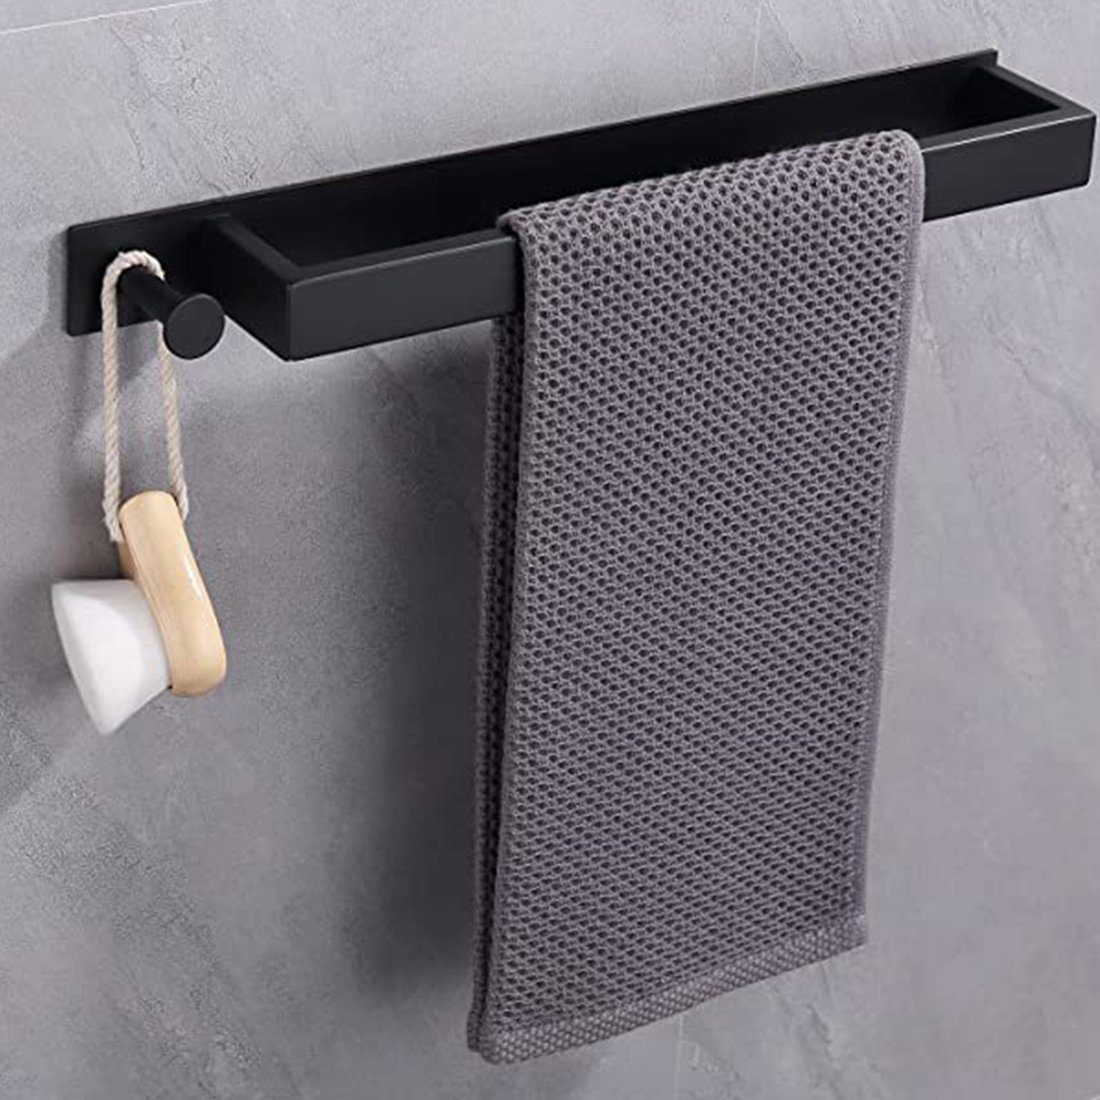 Haiaveng Handtuchhalter Handtuchhalter, Badezimmer Handtuchhalter mit einer Stange, Handtuchhalter Selbstklebend Ohne Bohren 40CM